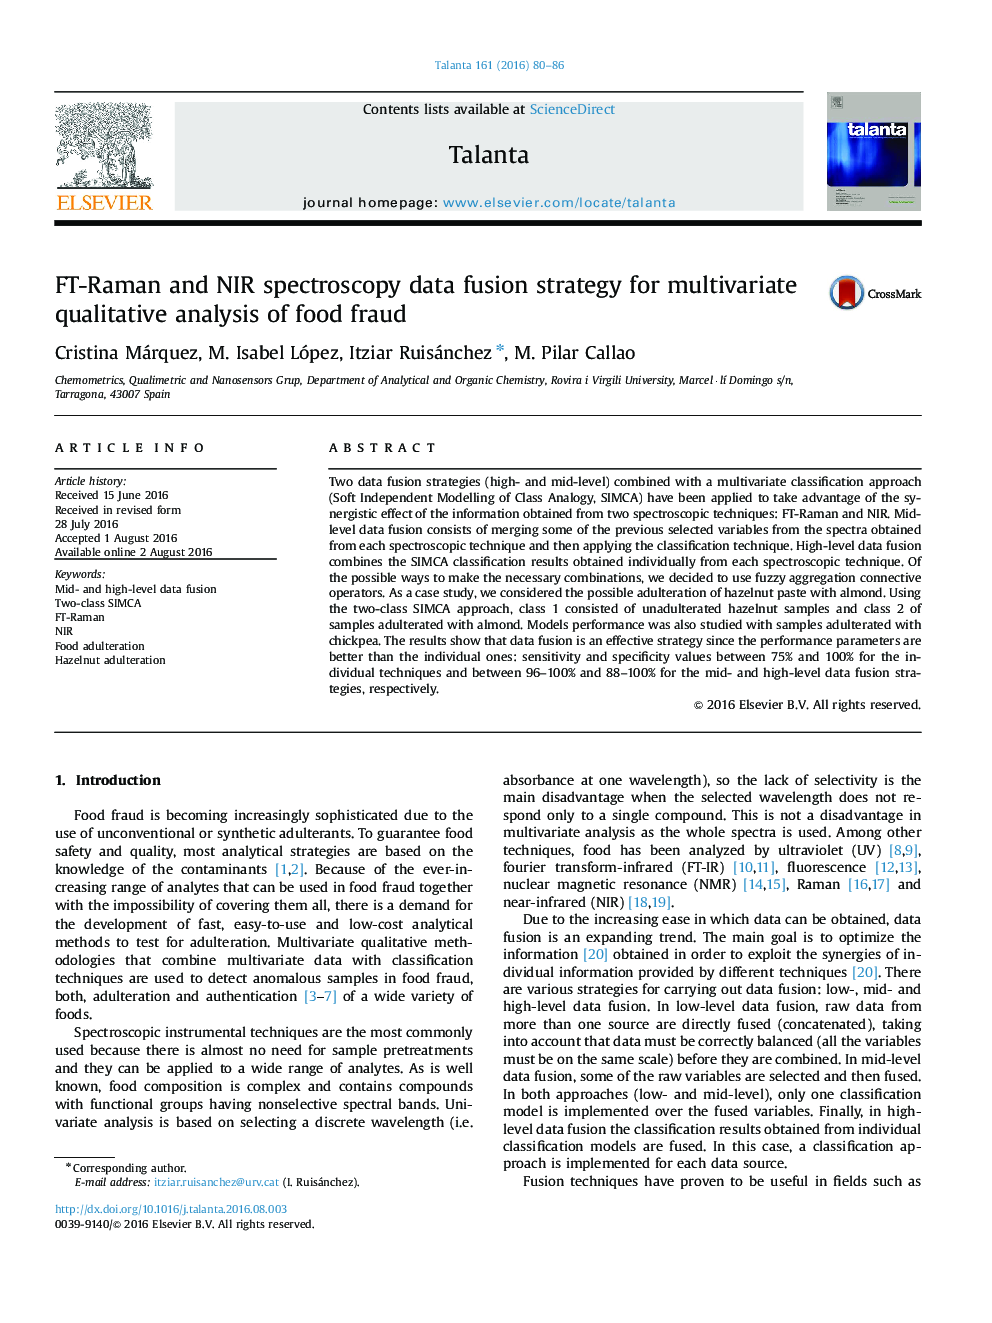 FT-Raman and NIR spectroscopy data fusion strategy for multivariate qualitative analysis of food fraud